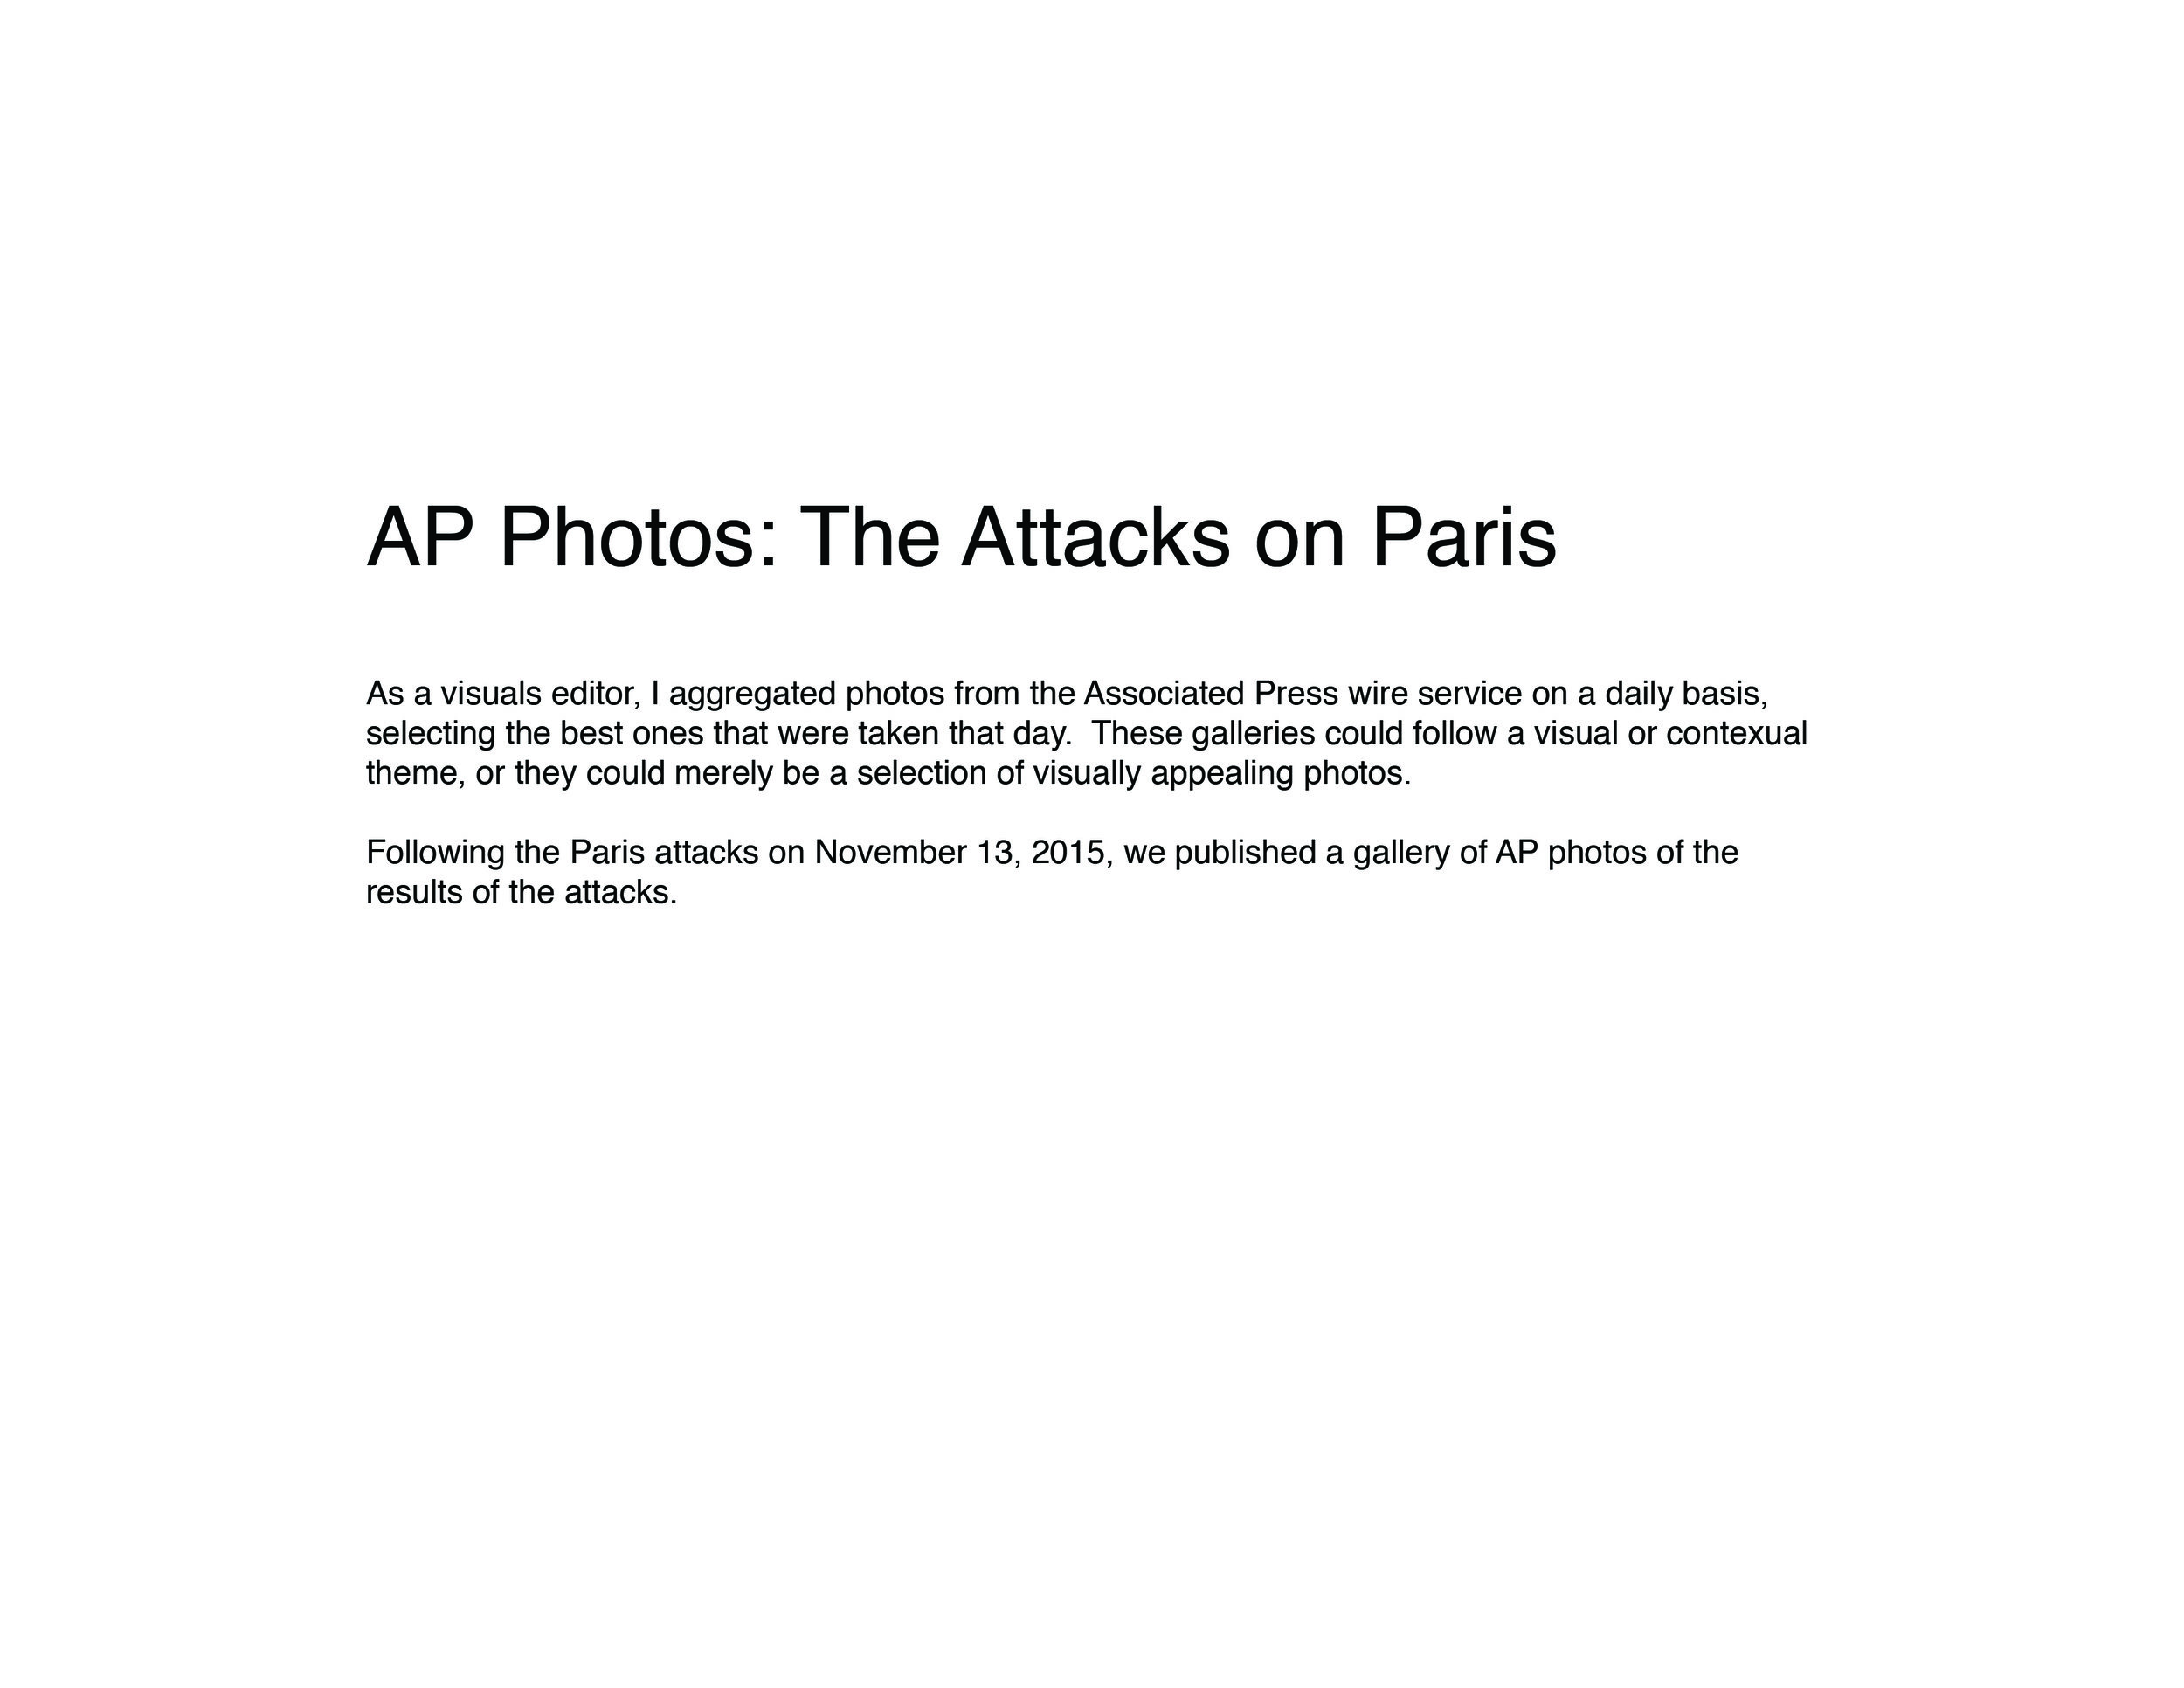 AP Paris.jpg